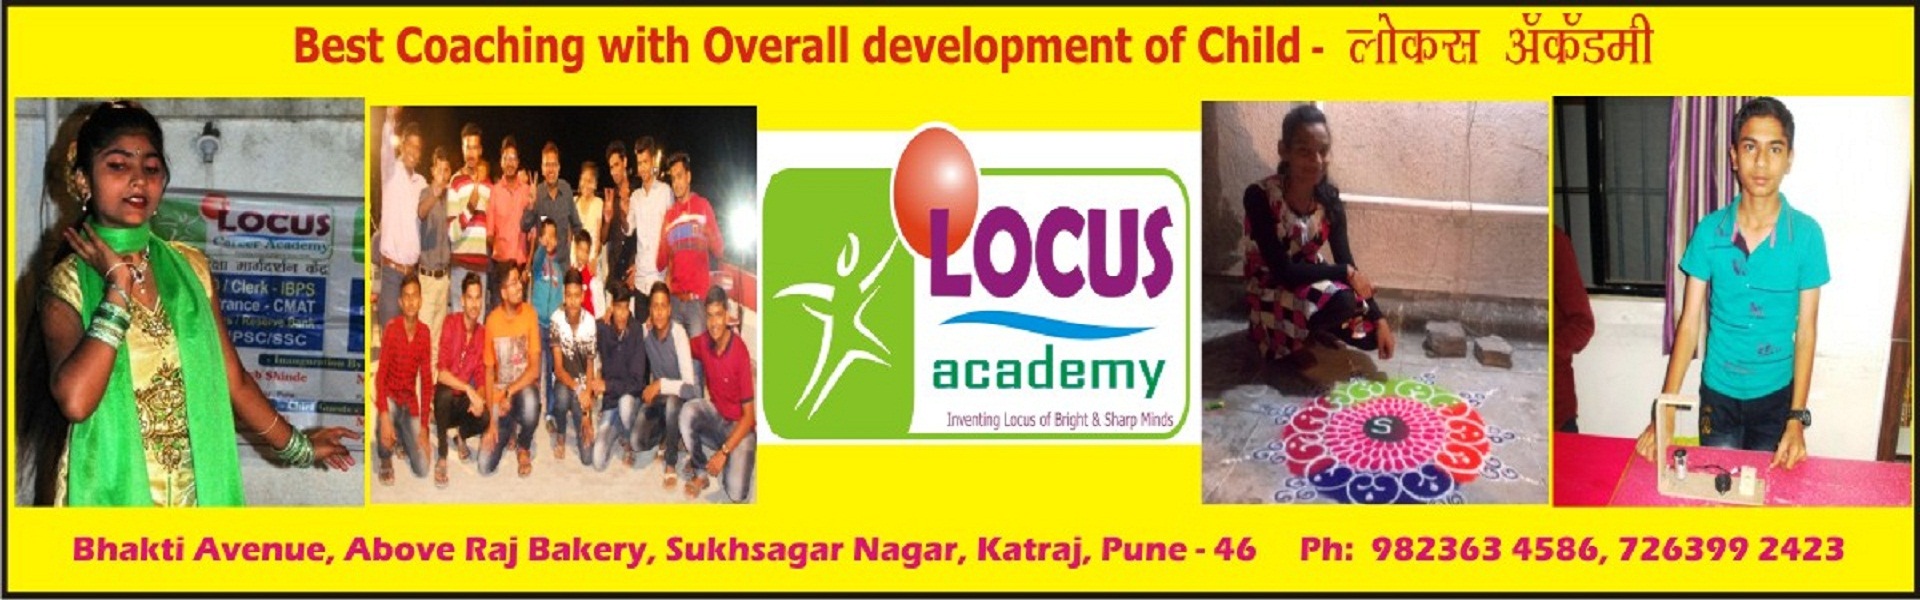 8th 9th ssc coaching classes katraj, Pune